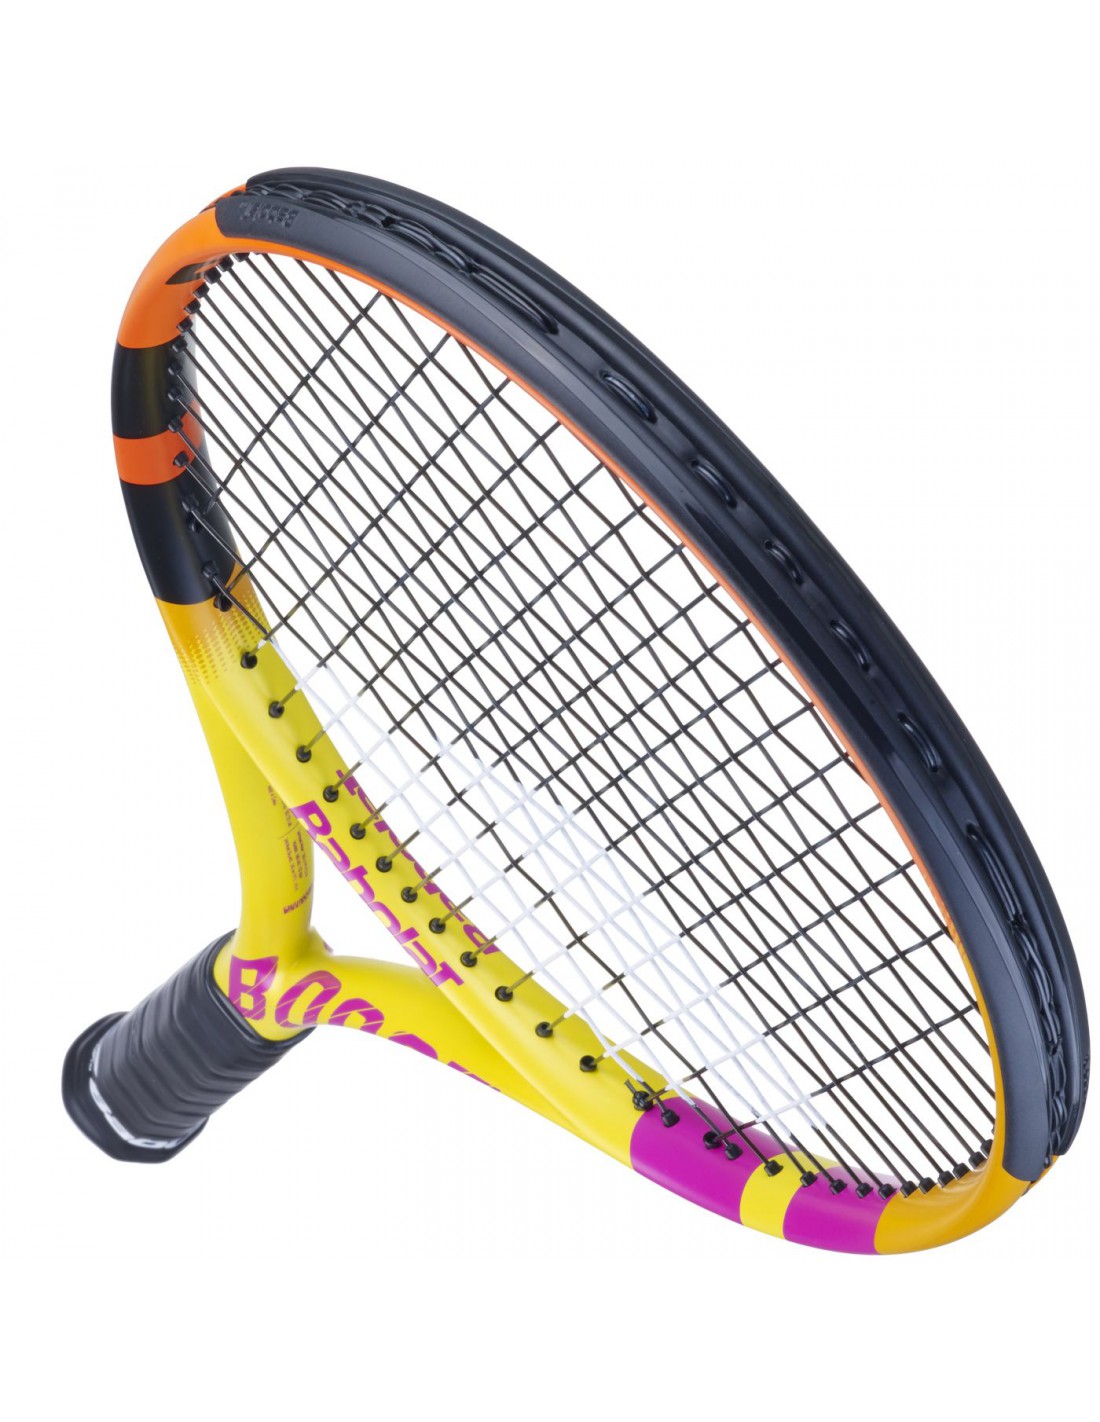 Tennis racket Babolat Boost Aero RAFA | Tennis Zone | Tennis Shop